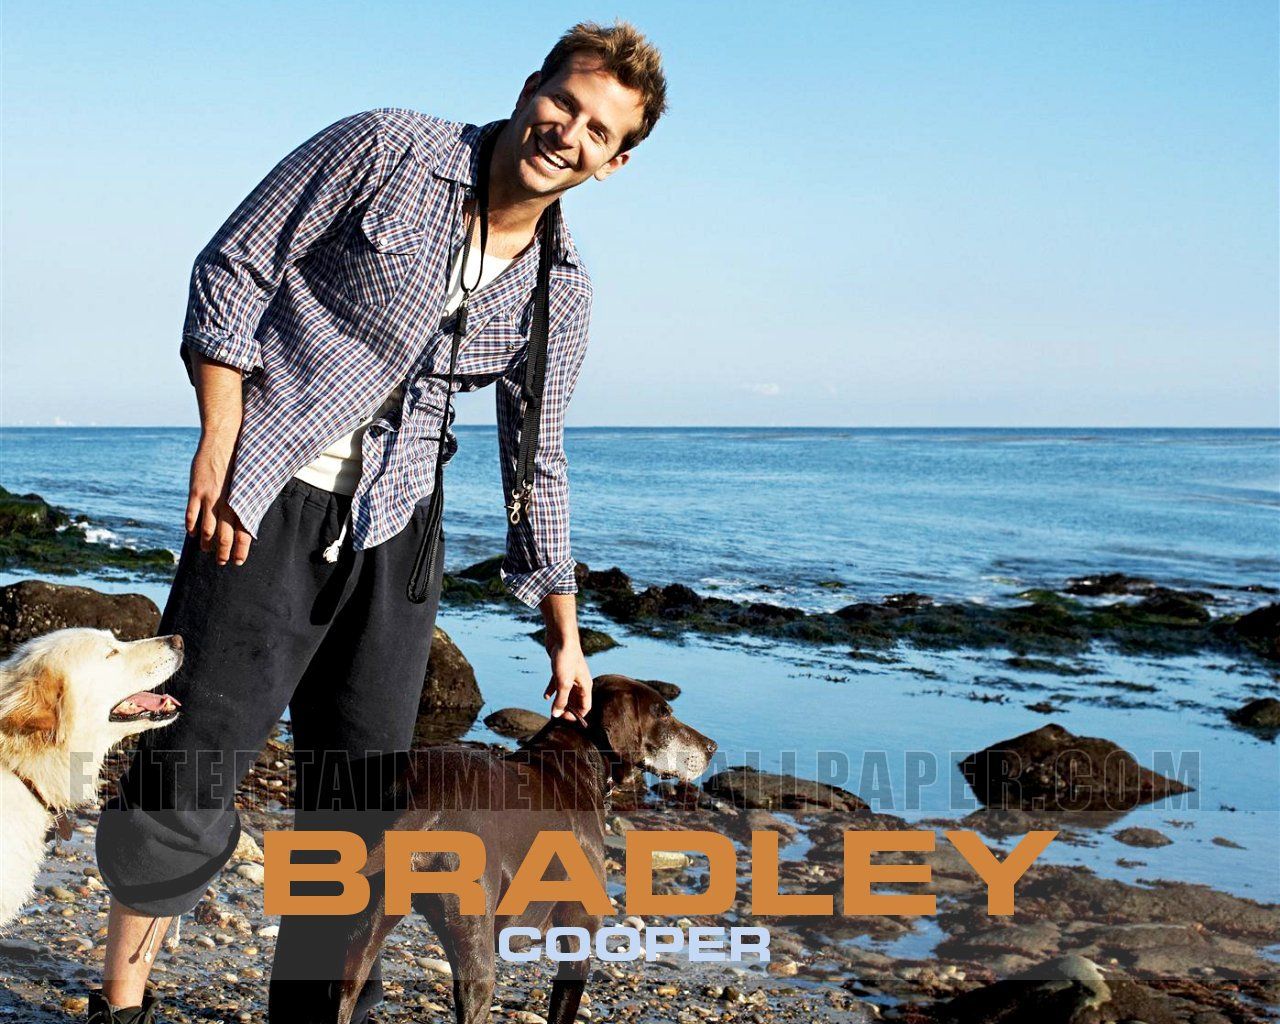 bradley_cooper - Bradley Cooper Wallpaper (23904577) - Fanpop